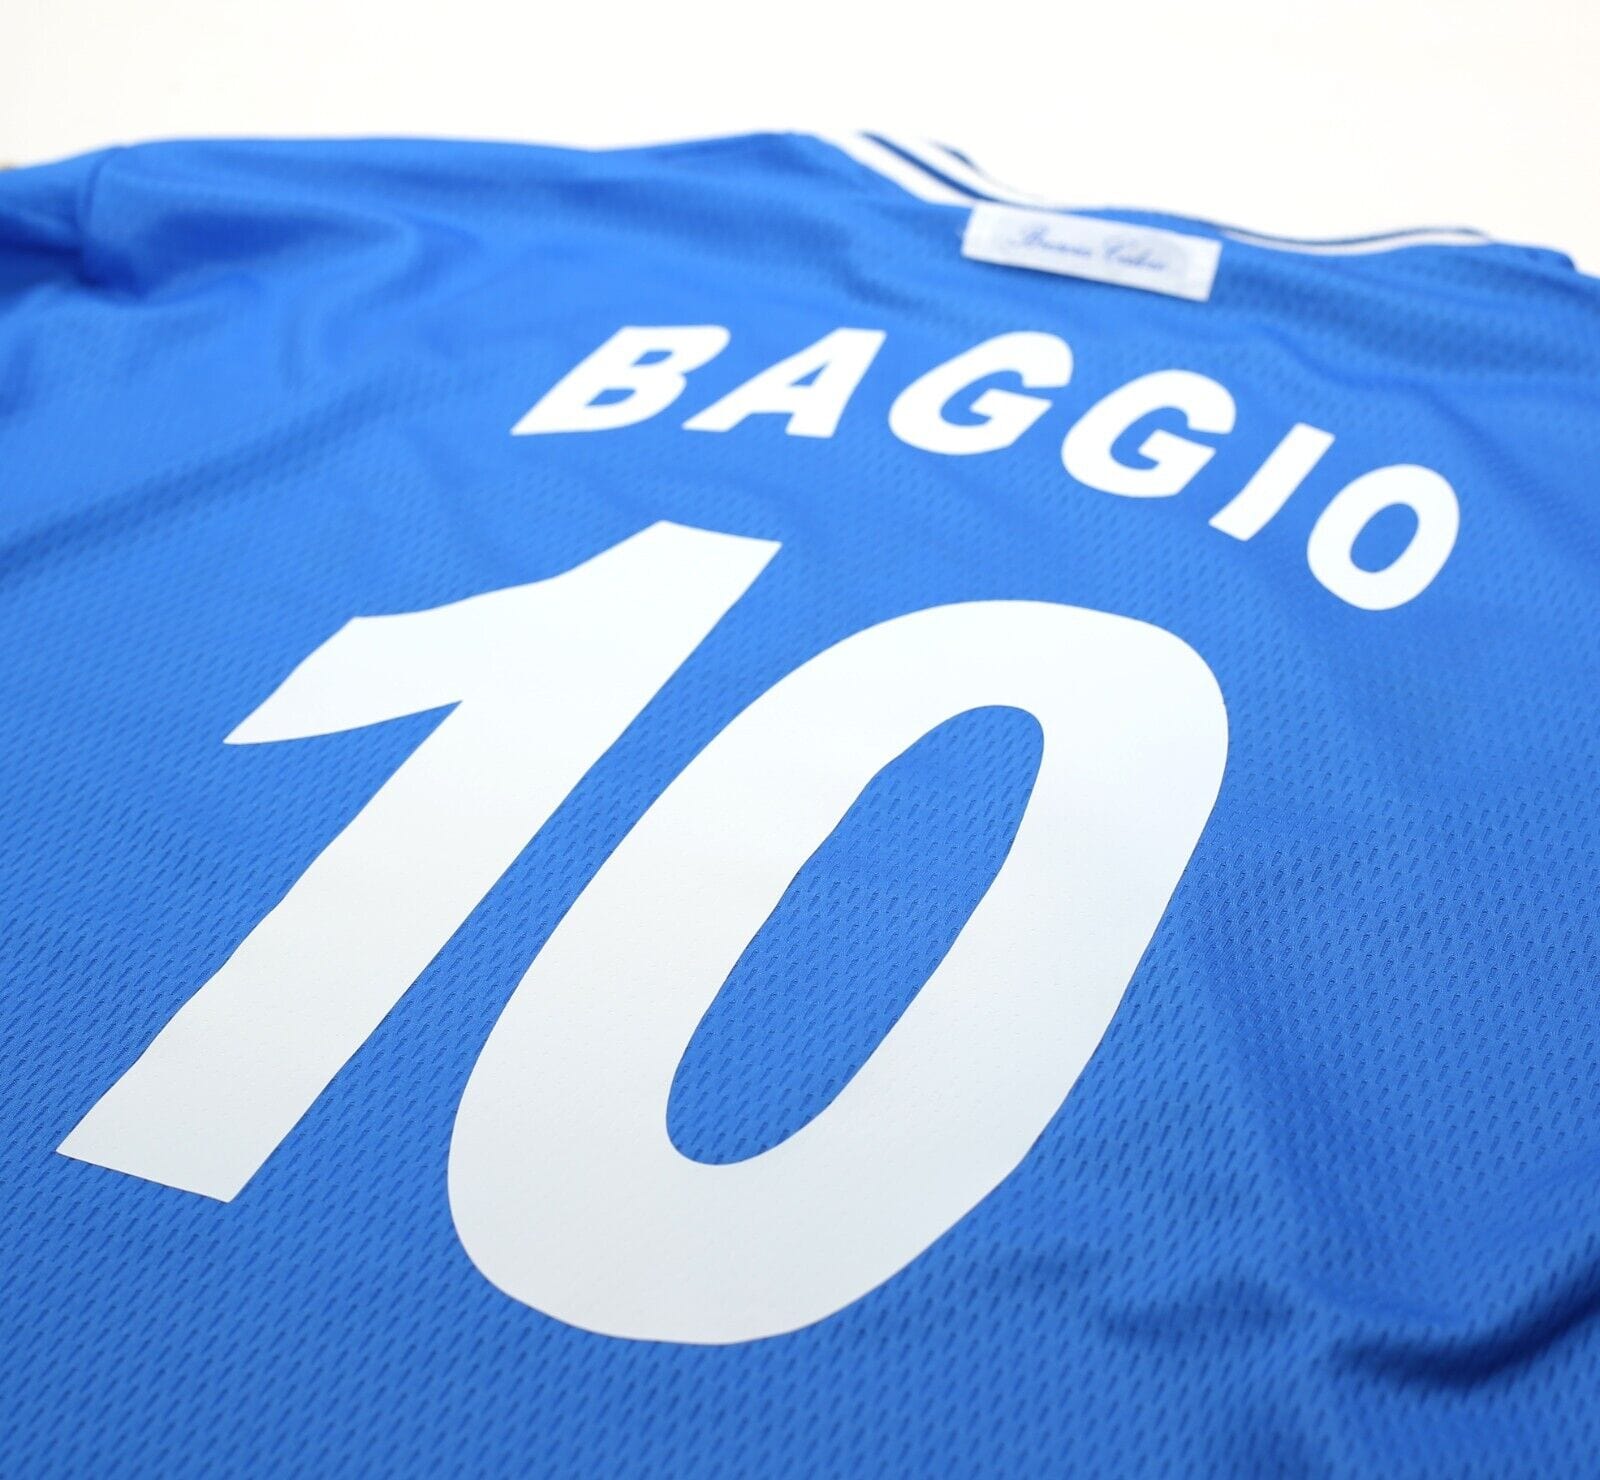 2000/01 BAGGIO #10 BRESCIA Vintage Garman Long Sleeve Home Football Shirt (M)